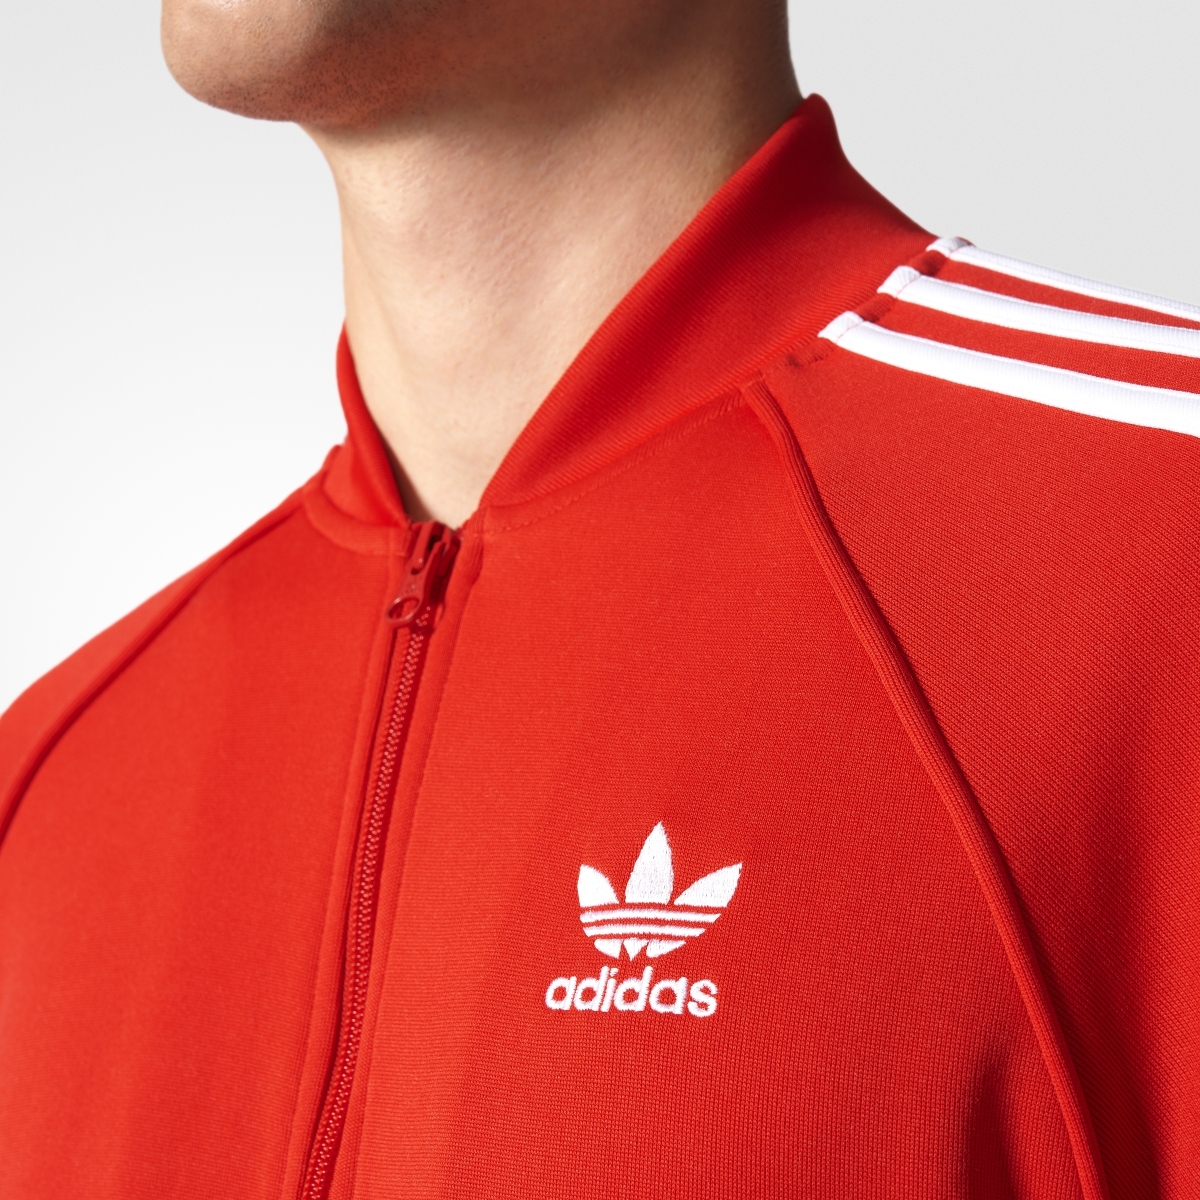 Adidas Originals Superstar Men's Track Jacket Vivid Red/White ay7062 - image 3 of 5